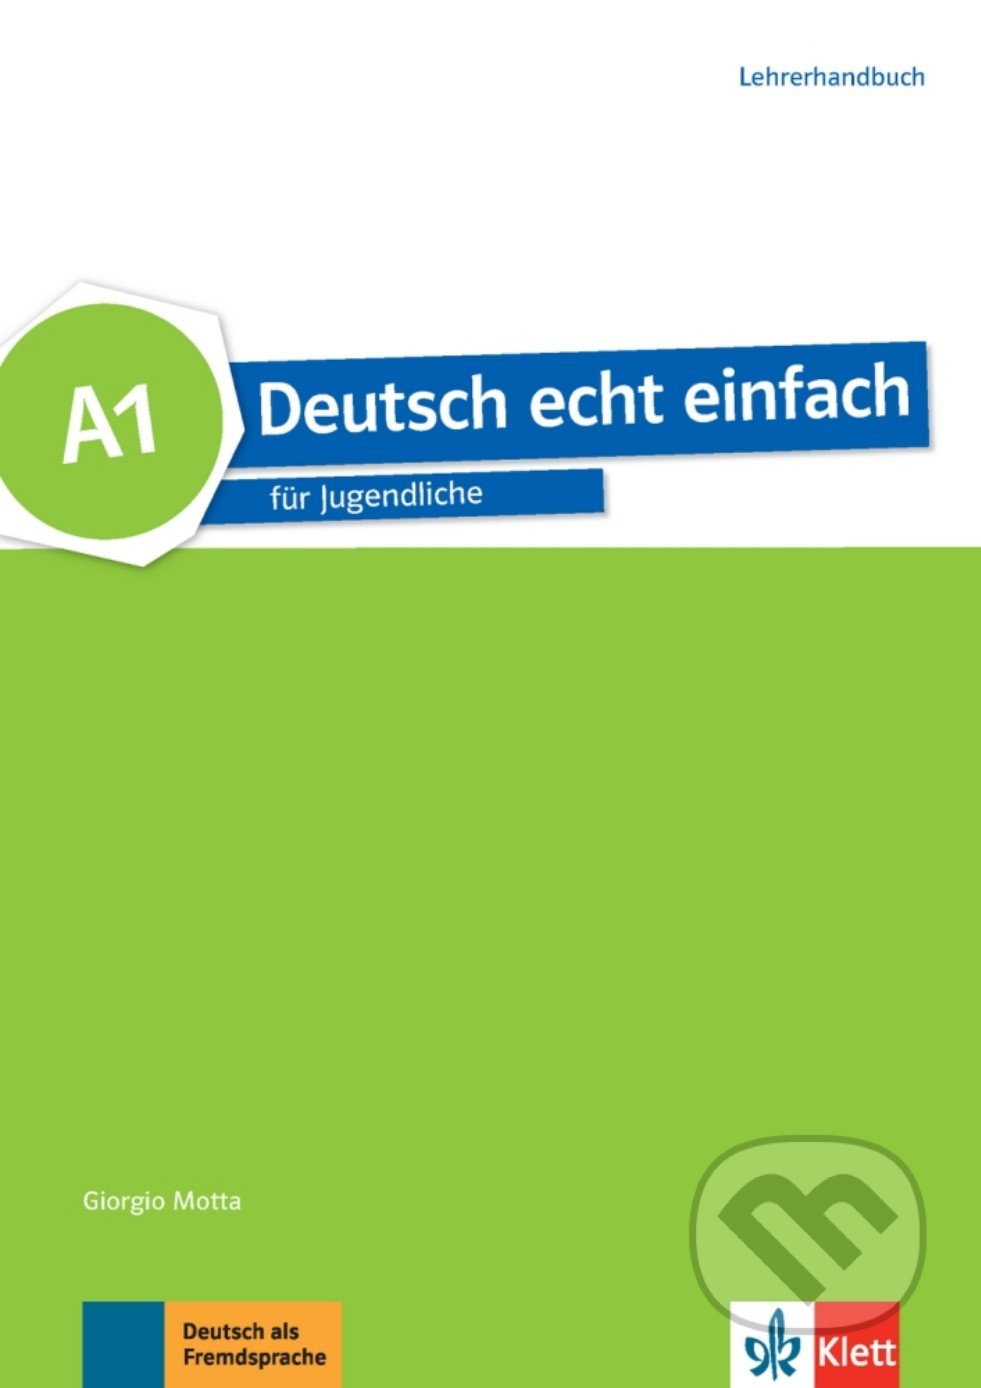 Deutsch echt einfach! 1 (A1) – Lehrerhandbuch, Klett, 2017